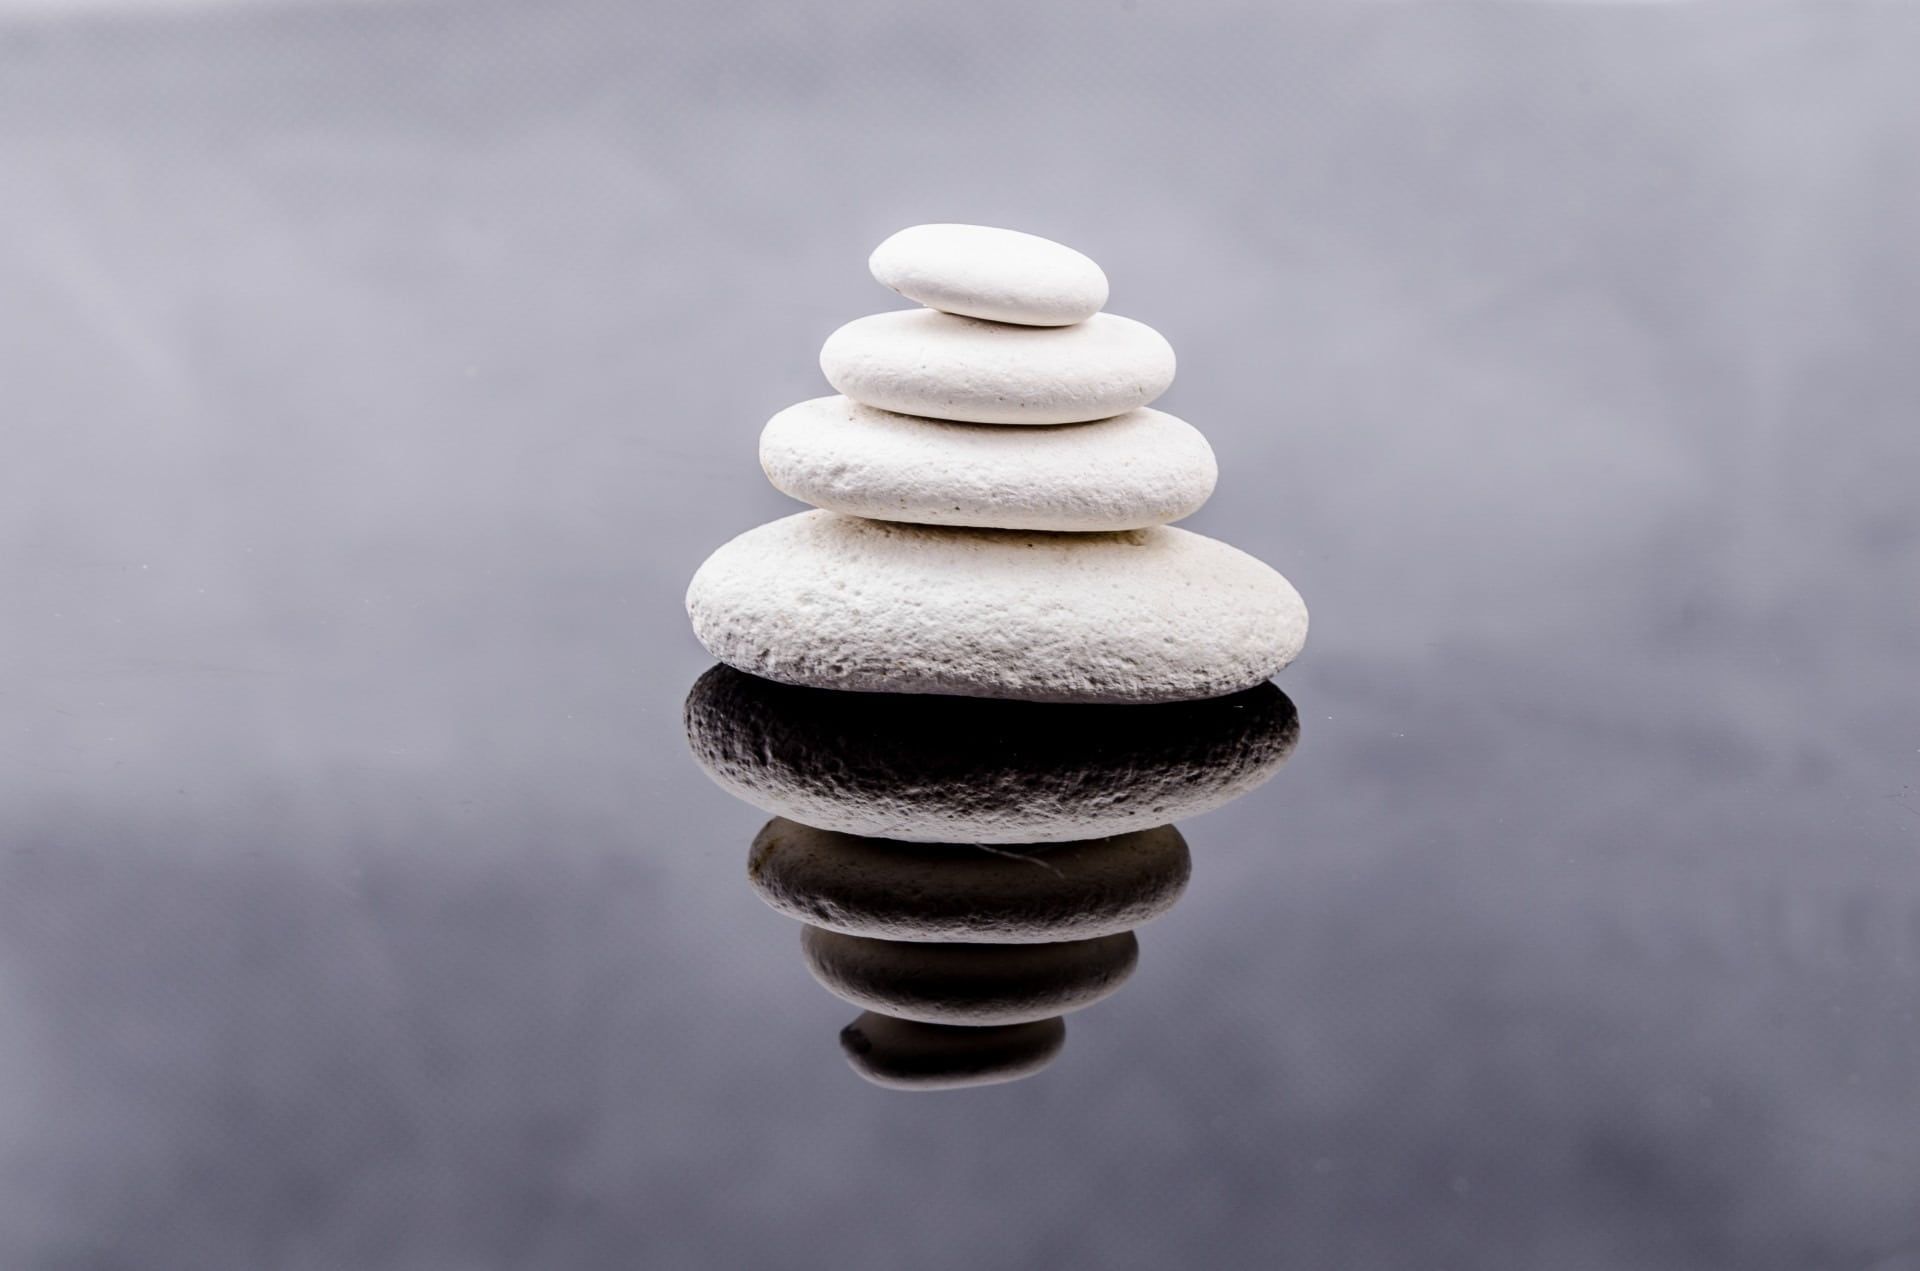 Black and White Zen Stones